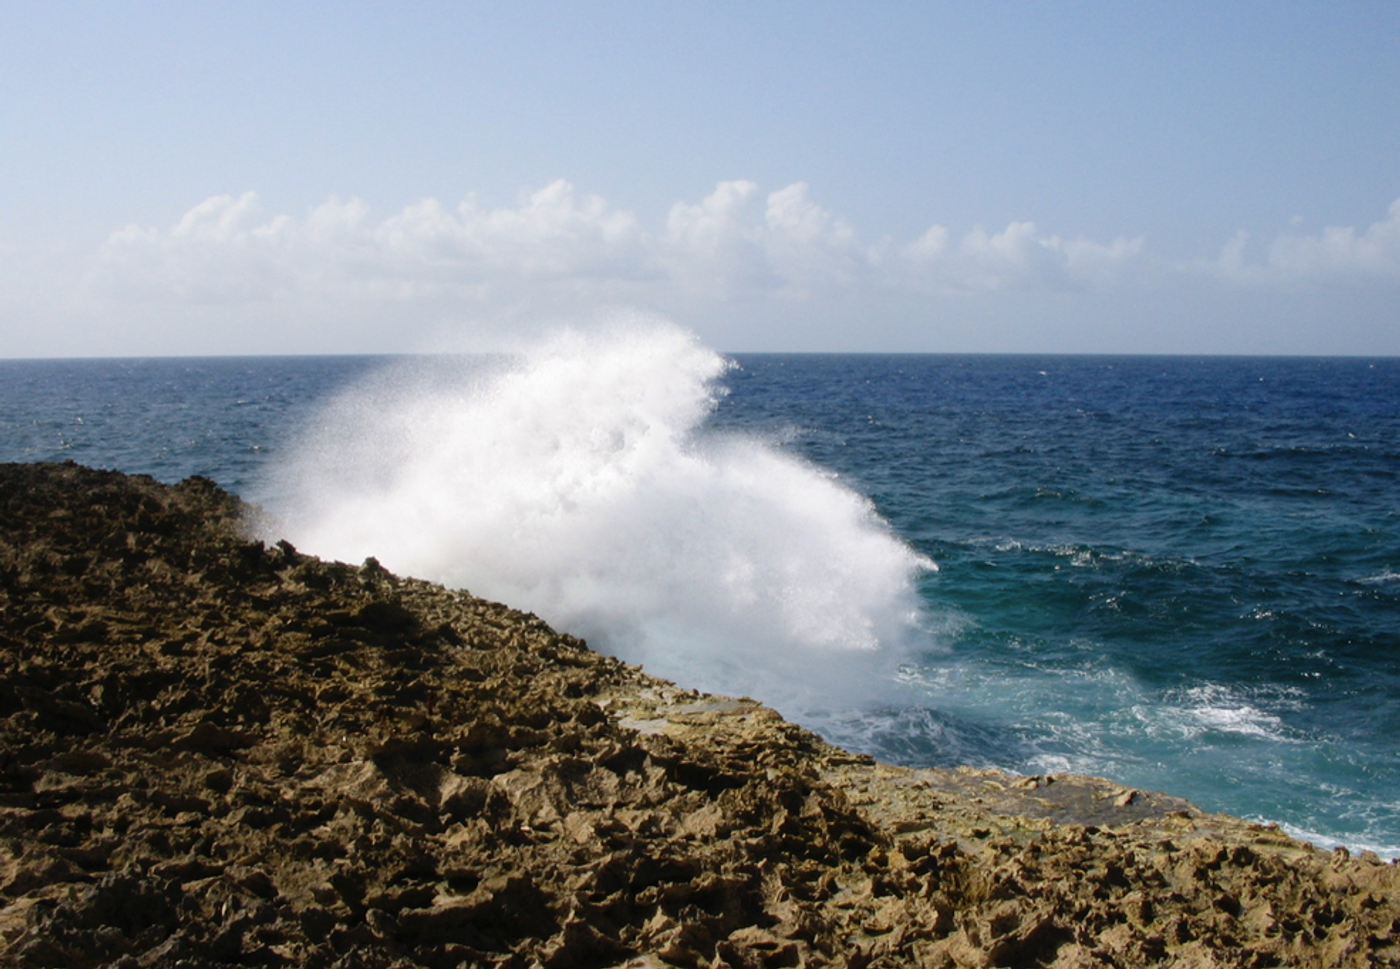 Waves break on the island of Curaçao / Image credit: Carmen Leitch